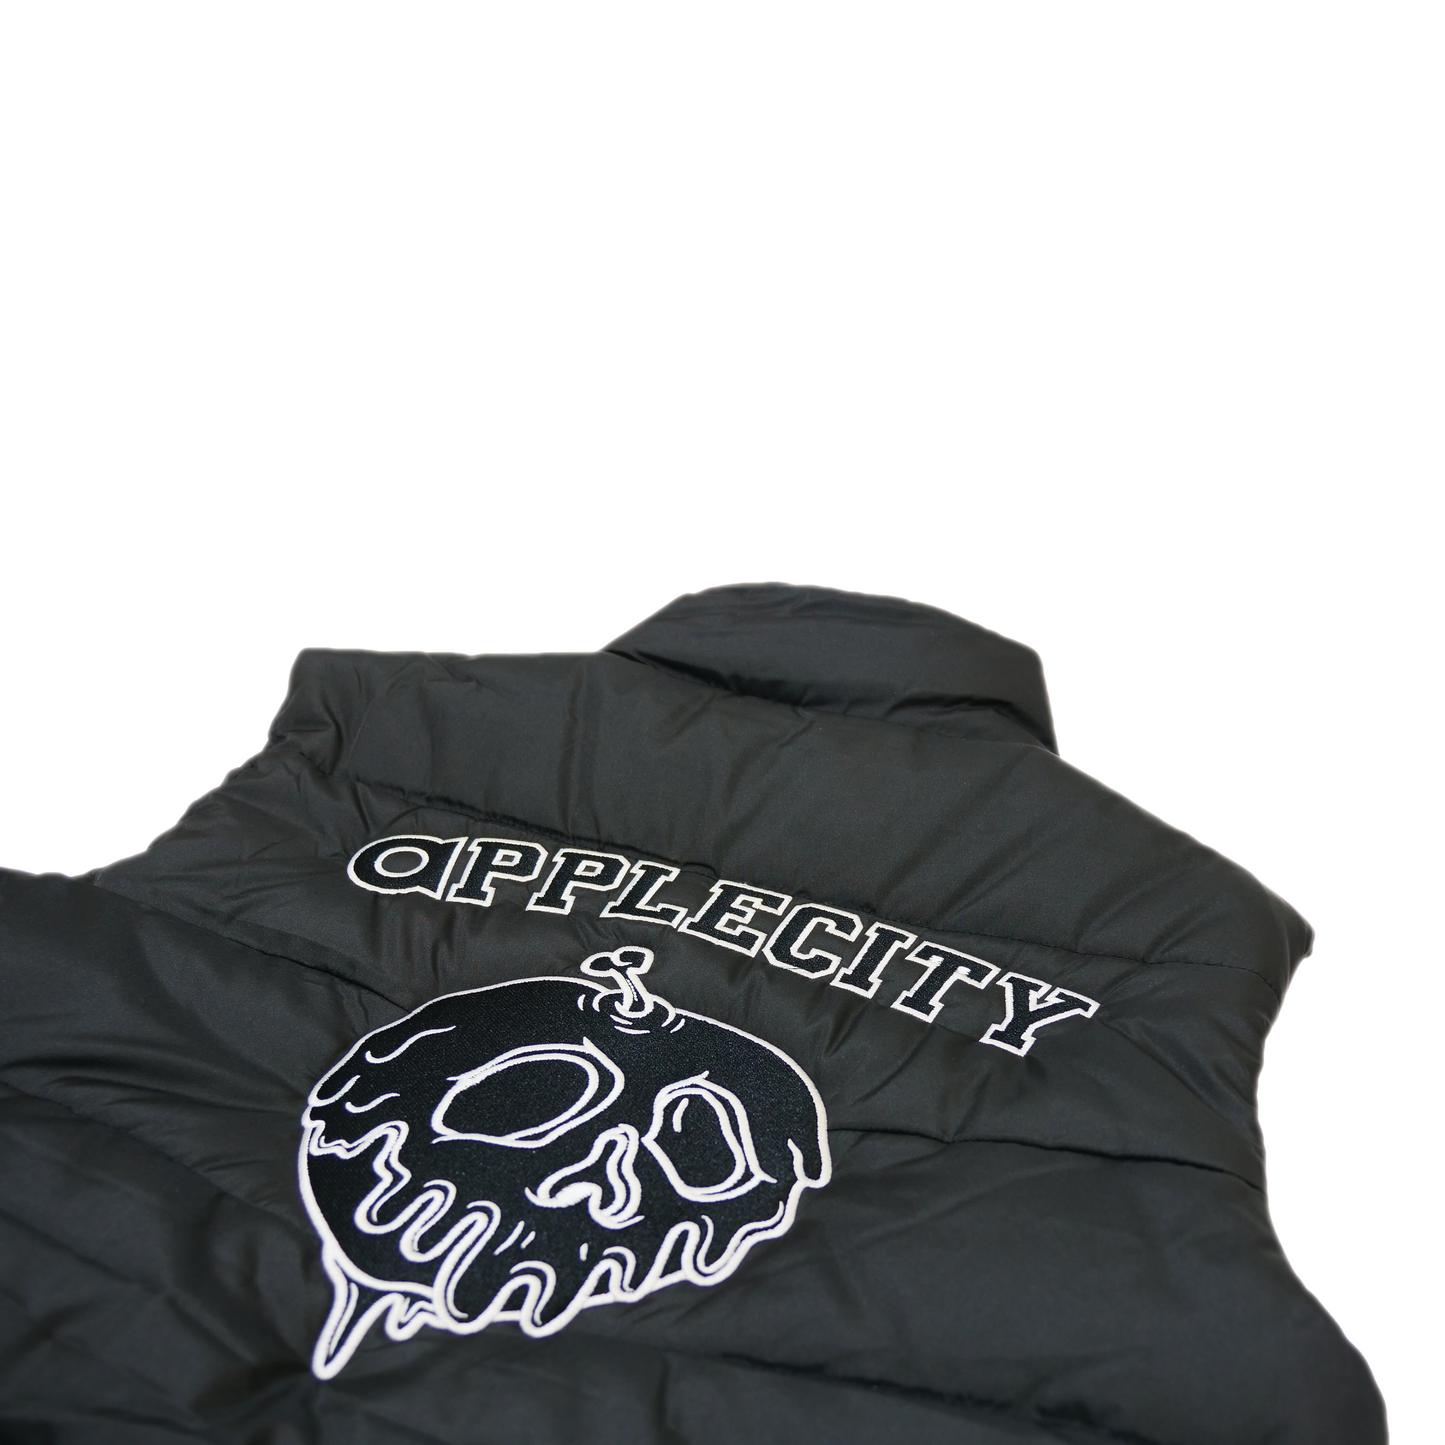 Applecity vest - Black